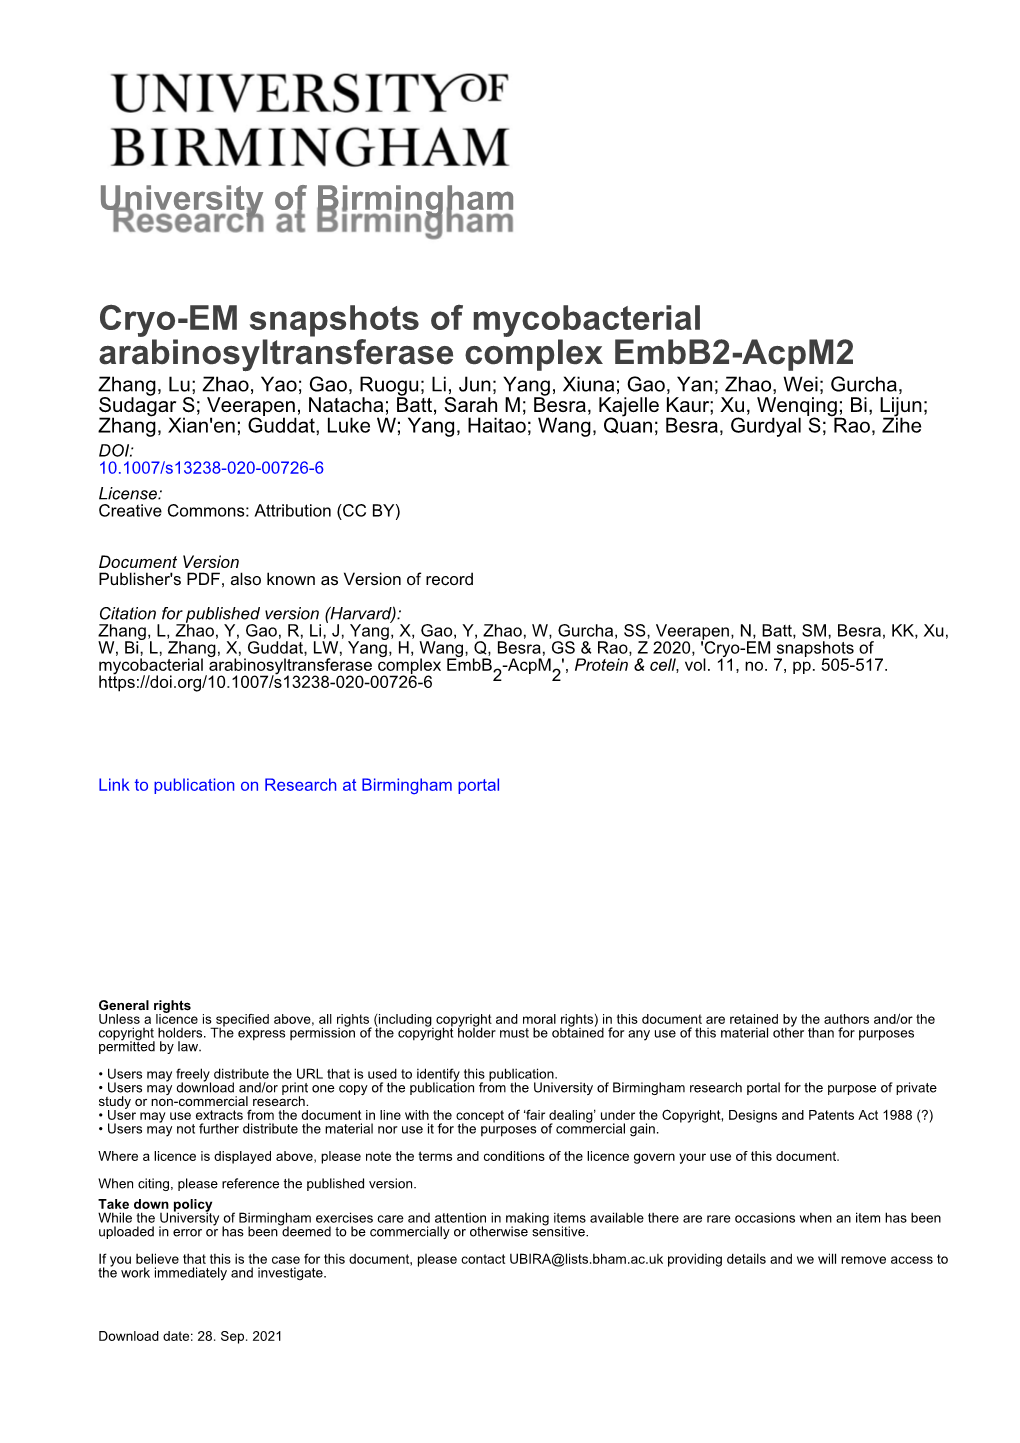 Cryo-EM Snapshots of Mycobacterial Arabinosyltransferase Complex